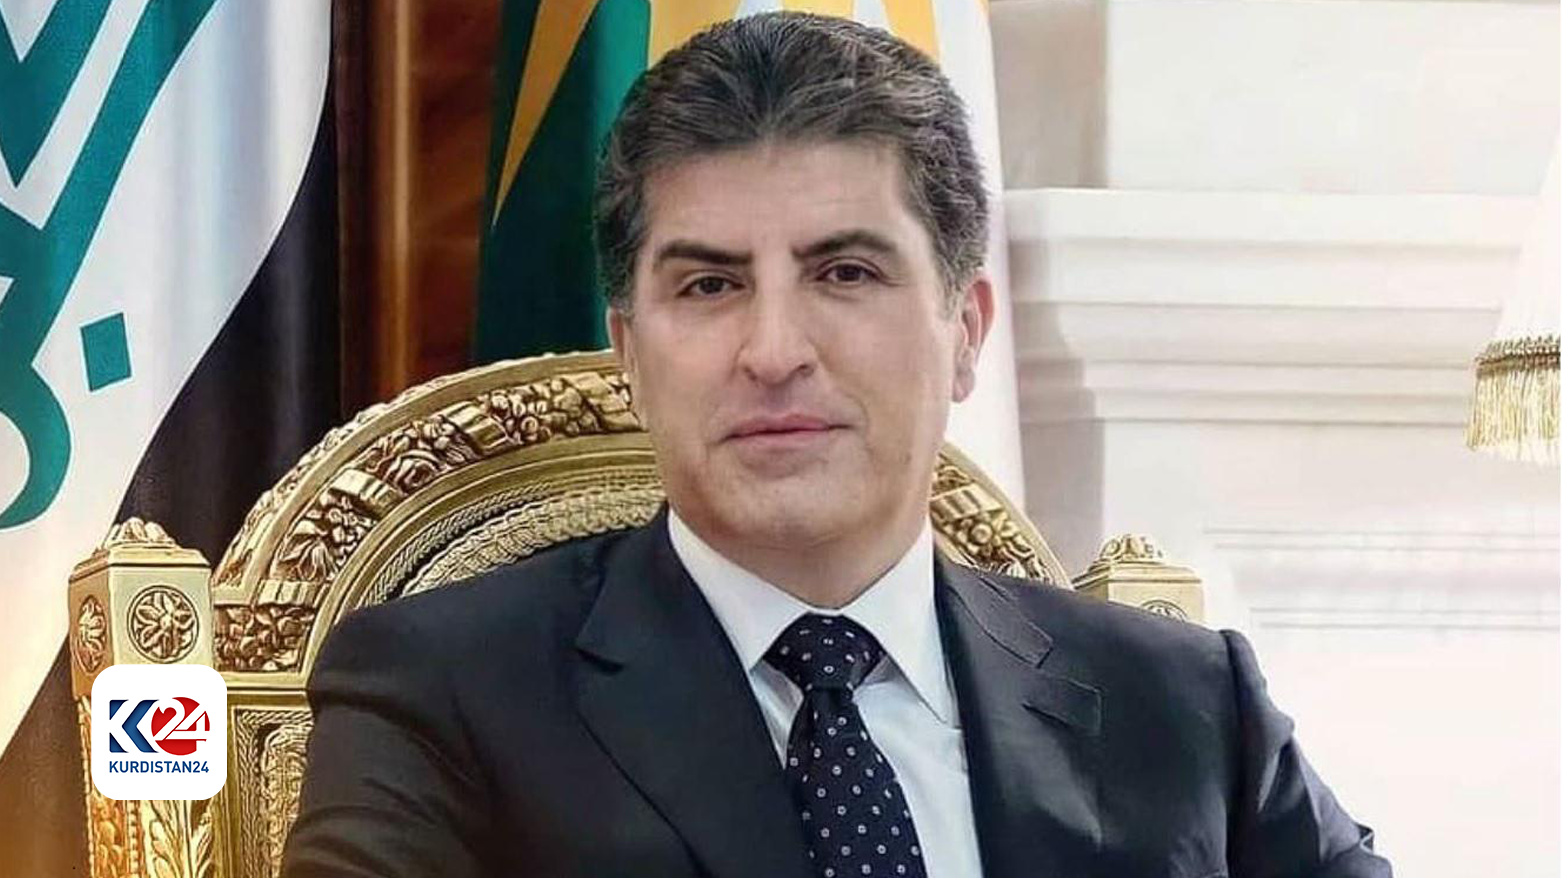 Leaders extend warm wishes to KRG President Nechirvan Barzani on Eid al